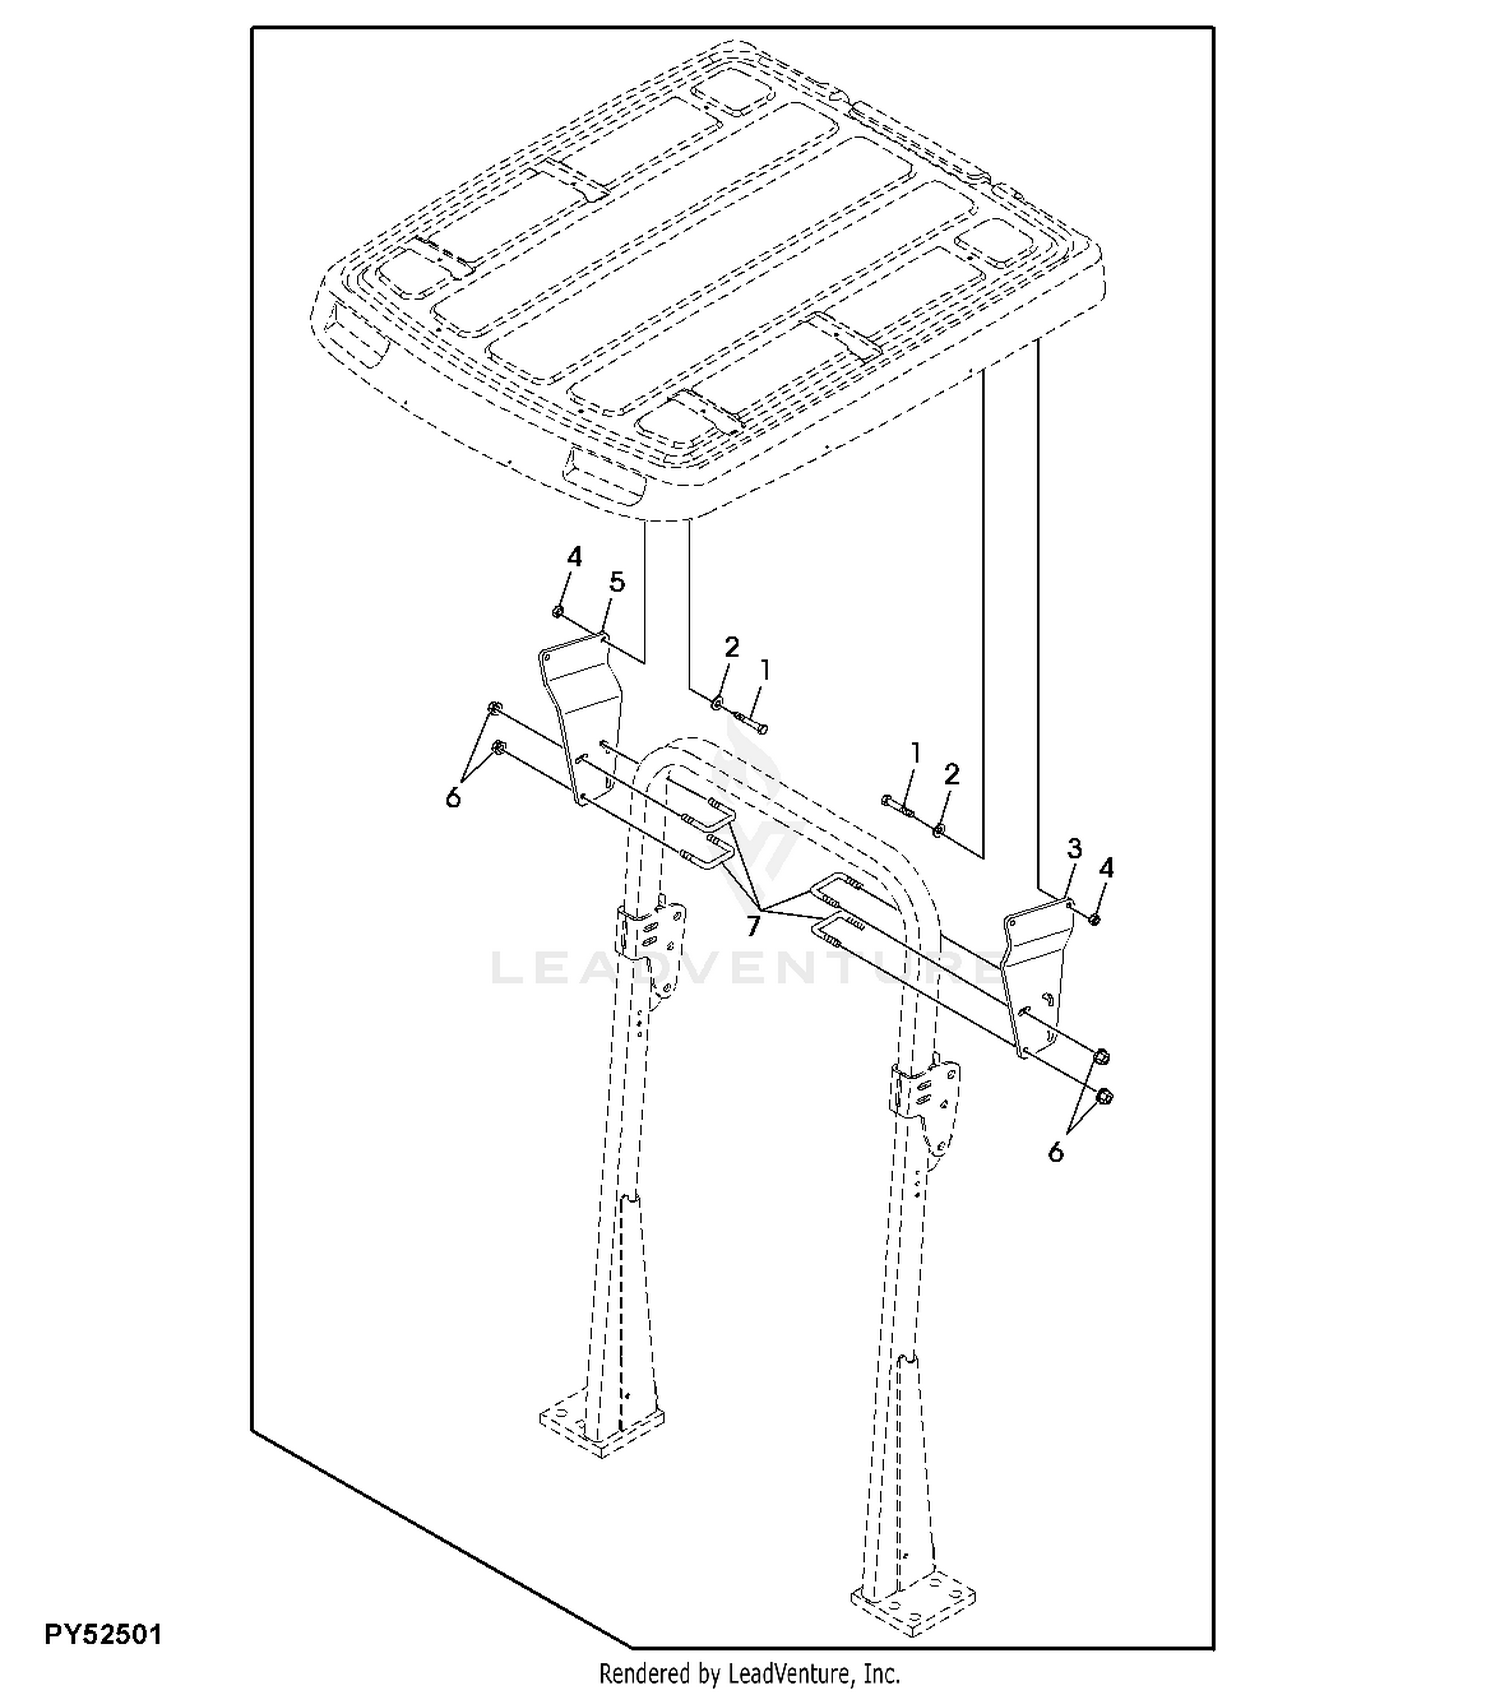 John Deere ELECTRICAL SYSTEM Fuse Box Cover (5045E,5055E,5065E)